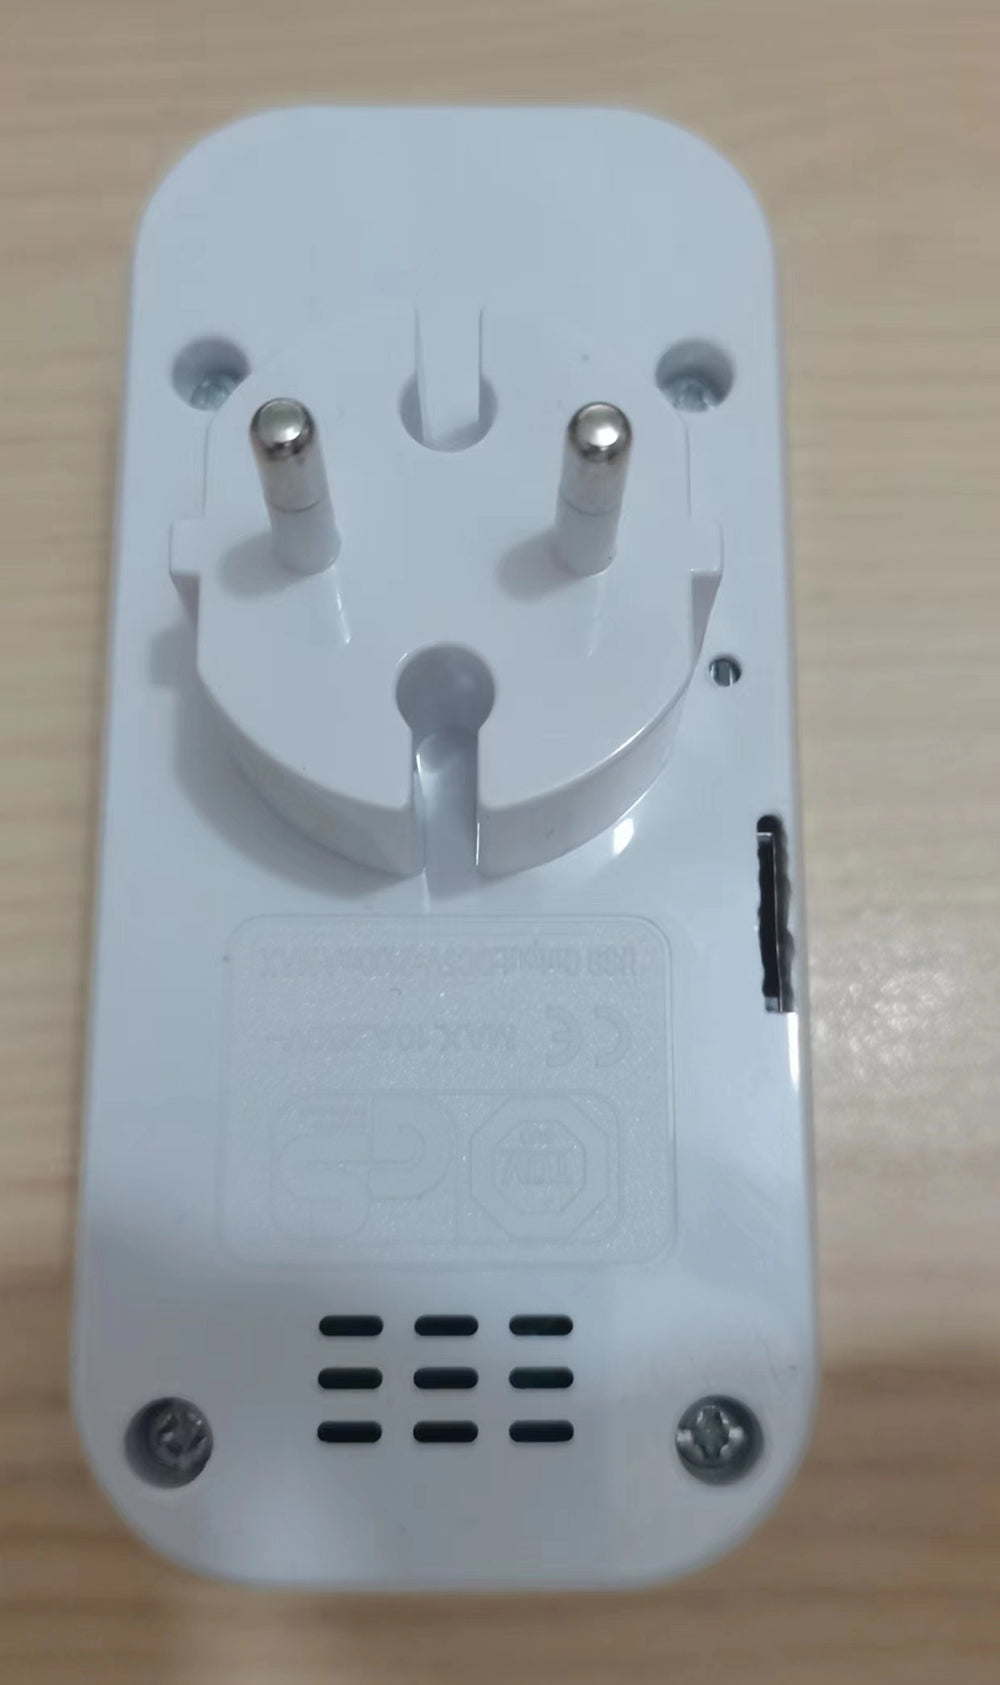 Spy Wifi Mini stopcontact verborgen Camera